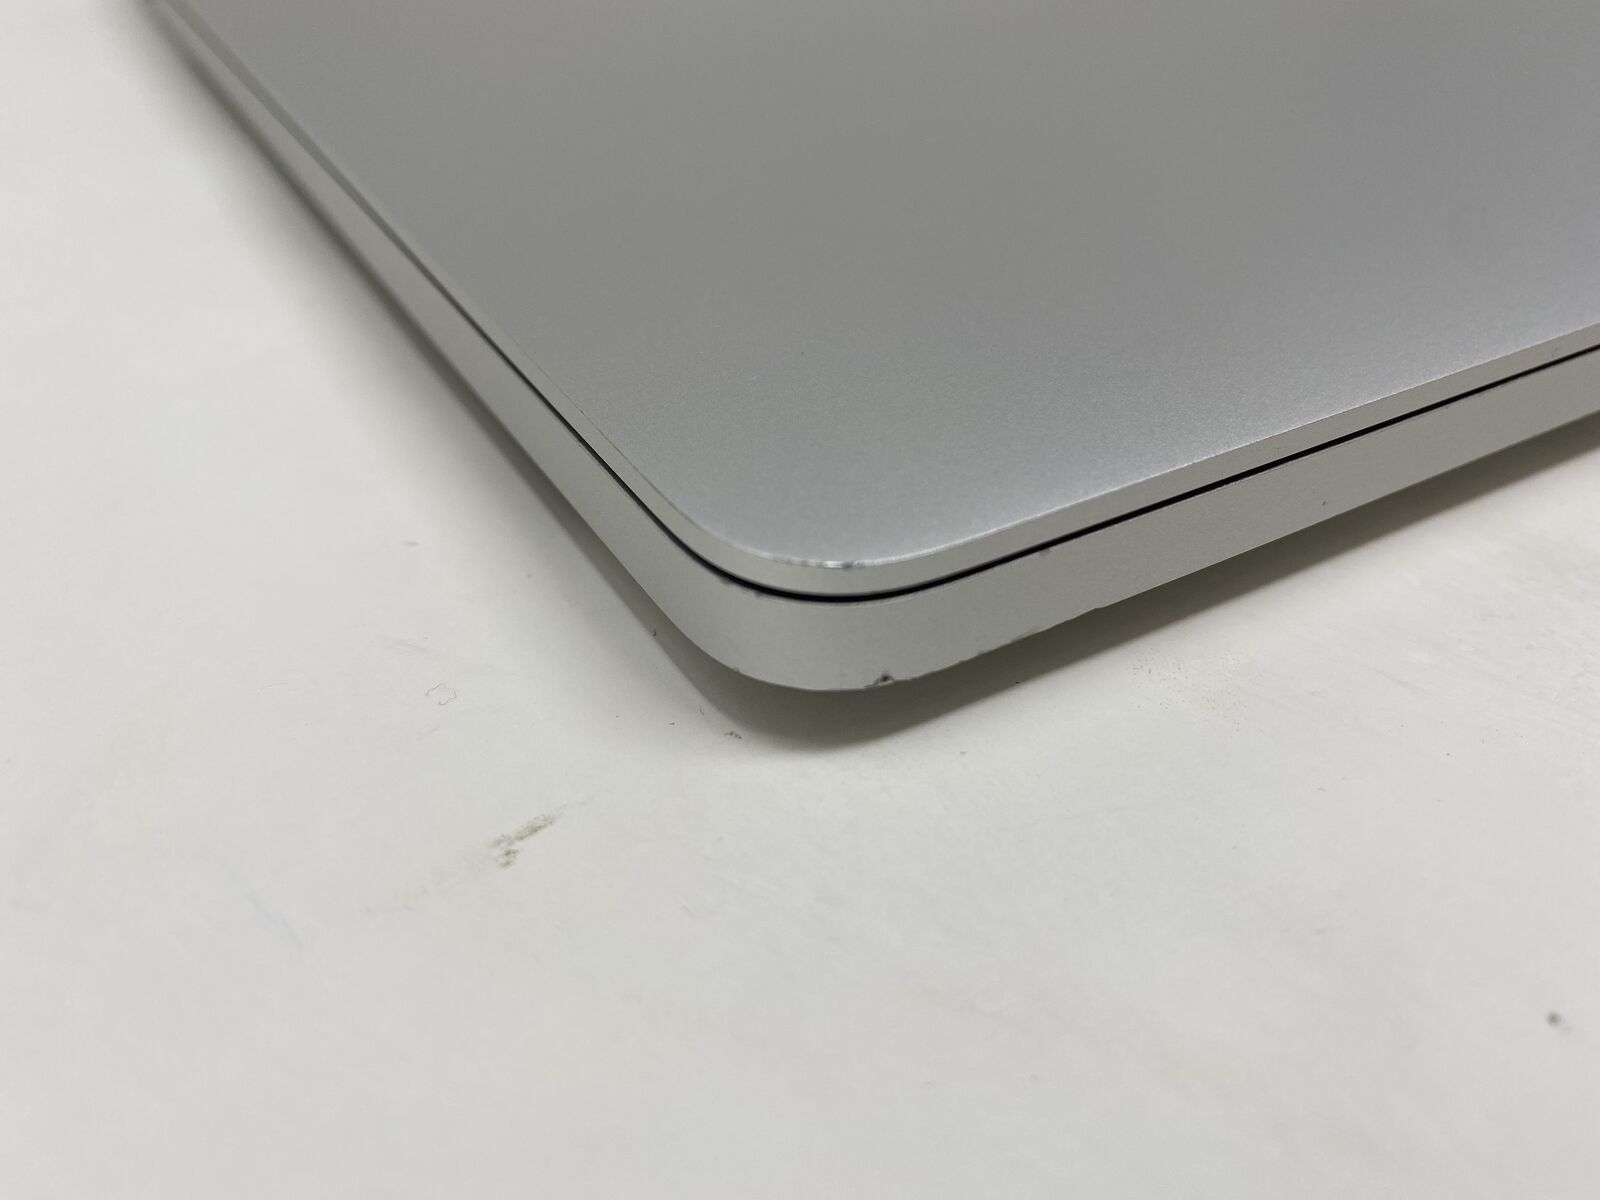 Apple MacBook Pro (16-inch 2019) 2.4 GHz i9 32GB 2TB SSD (Silver)